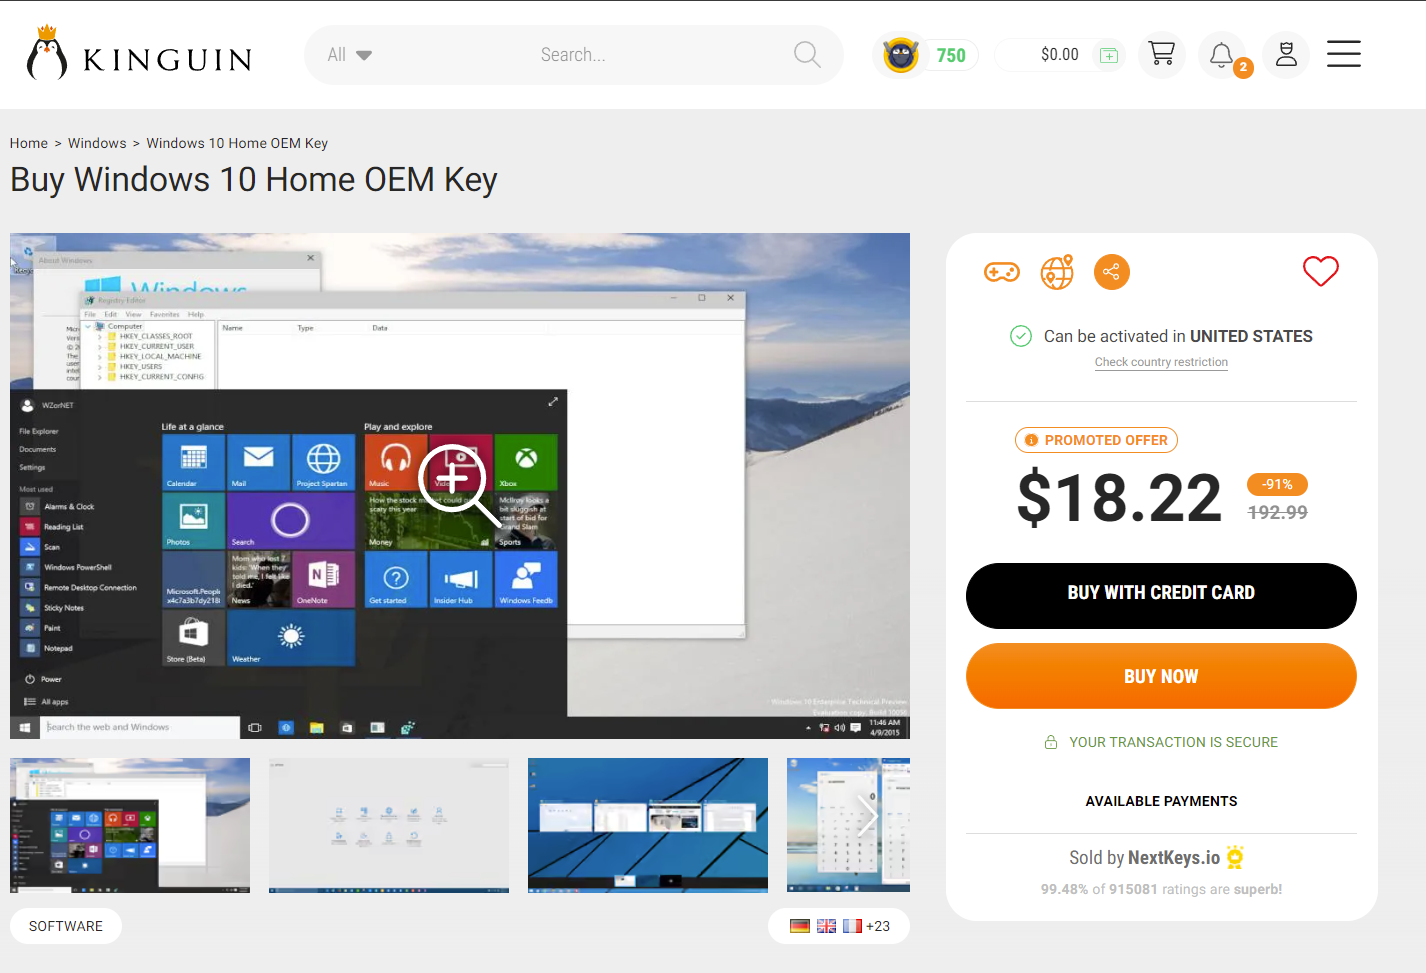 Kinguin's Windows 10 Home Page